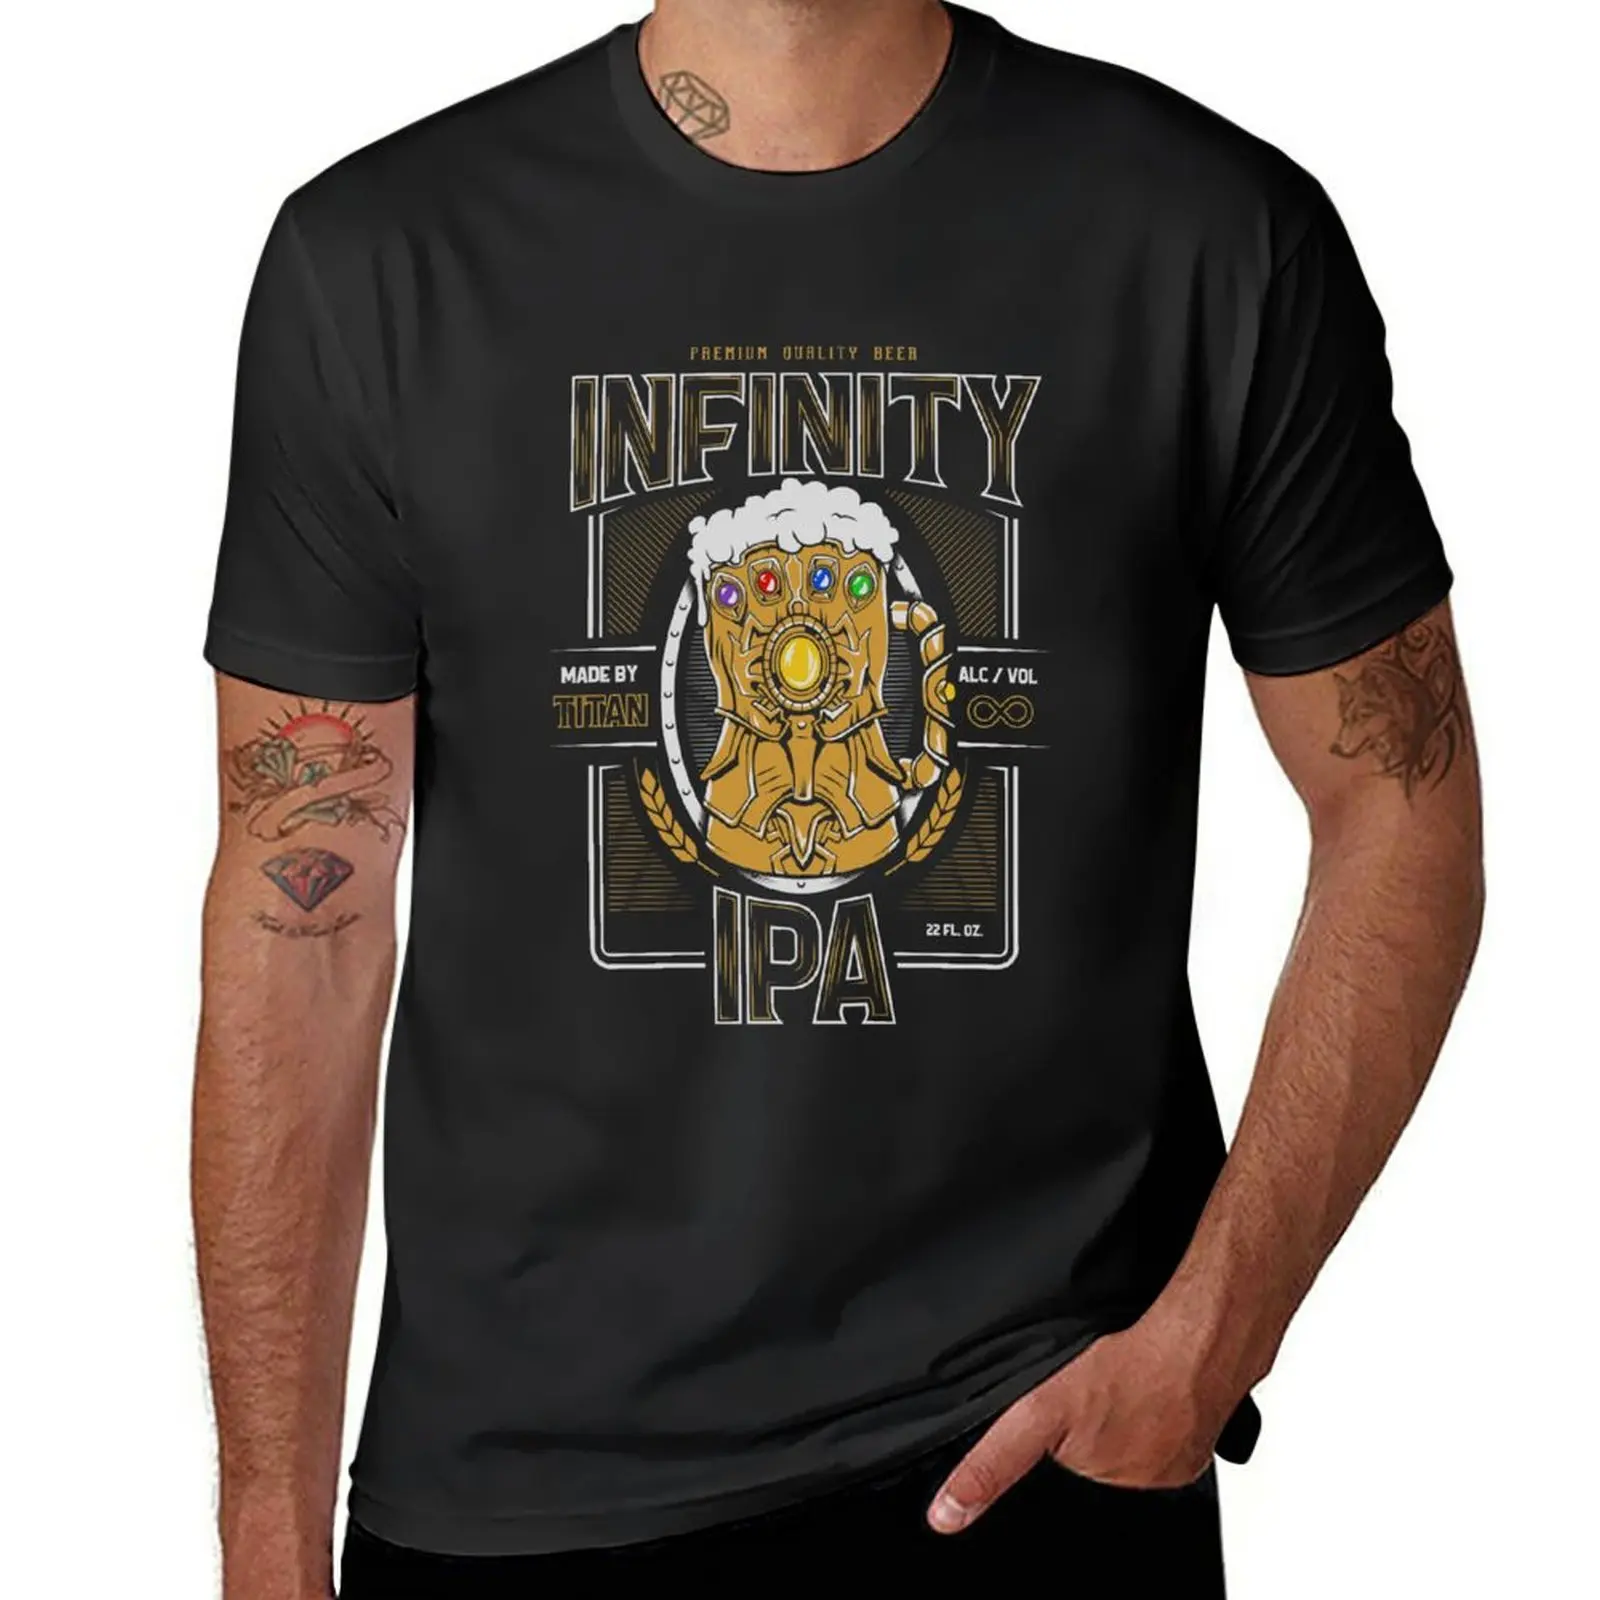 Футболка Infinity IPA, пустые футболки, футболки на заказ, винтажная футболка, летняя одежда, мужские футболки